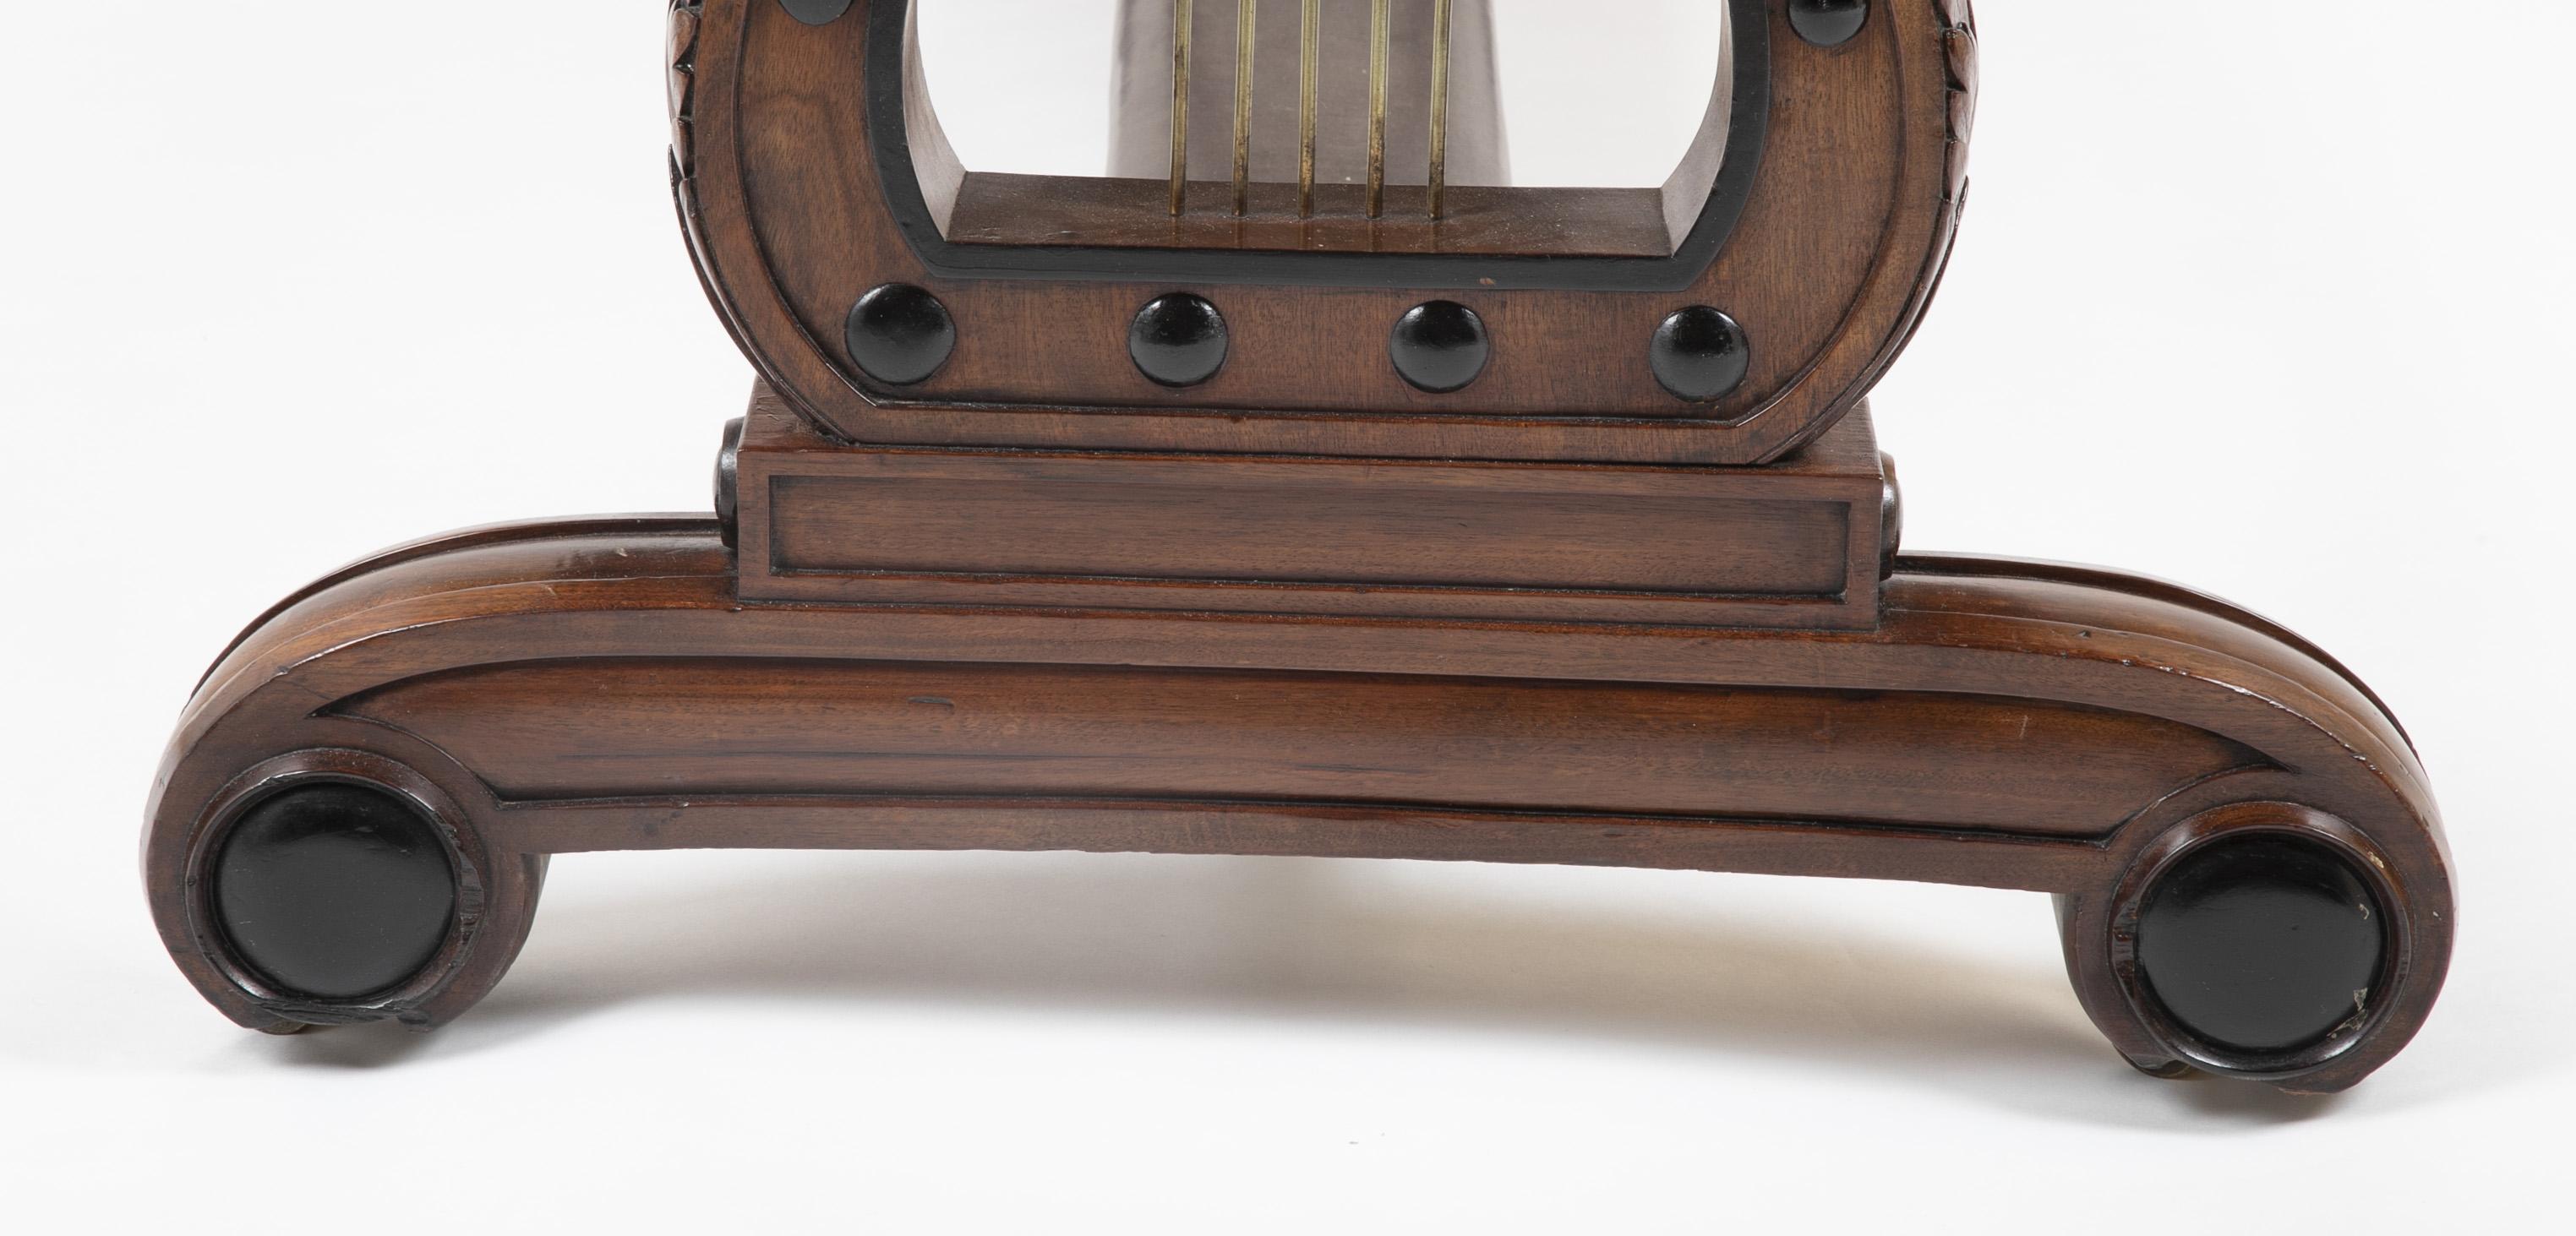 English Regency Mahogany and Ebonized Wood Lyre-End Sofa / Writing Table For Sale 8